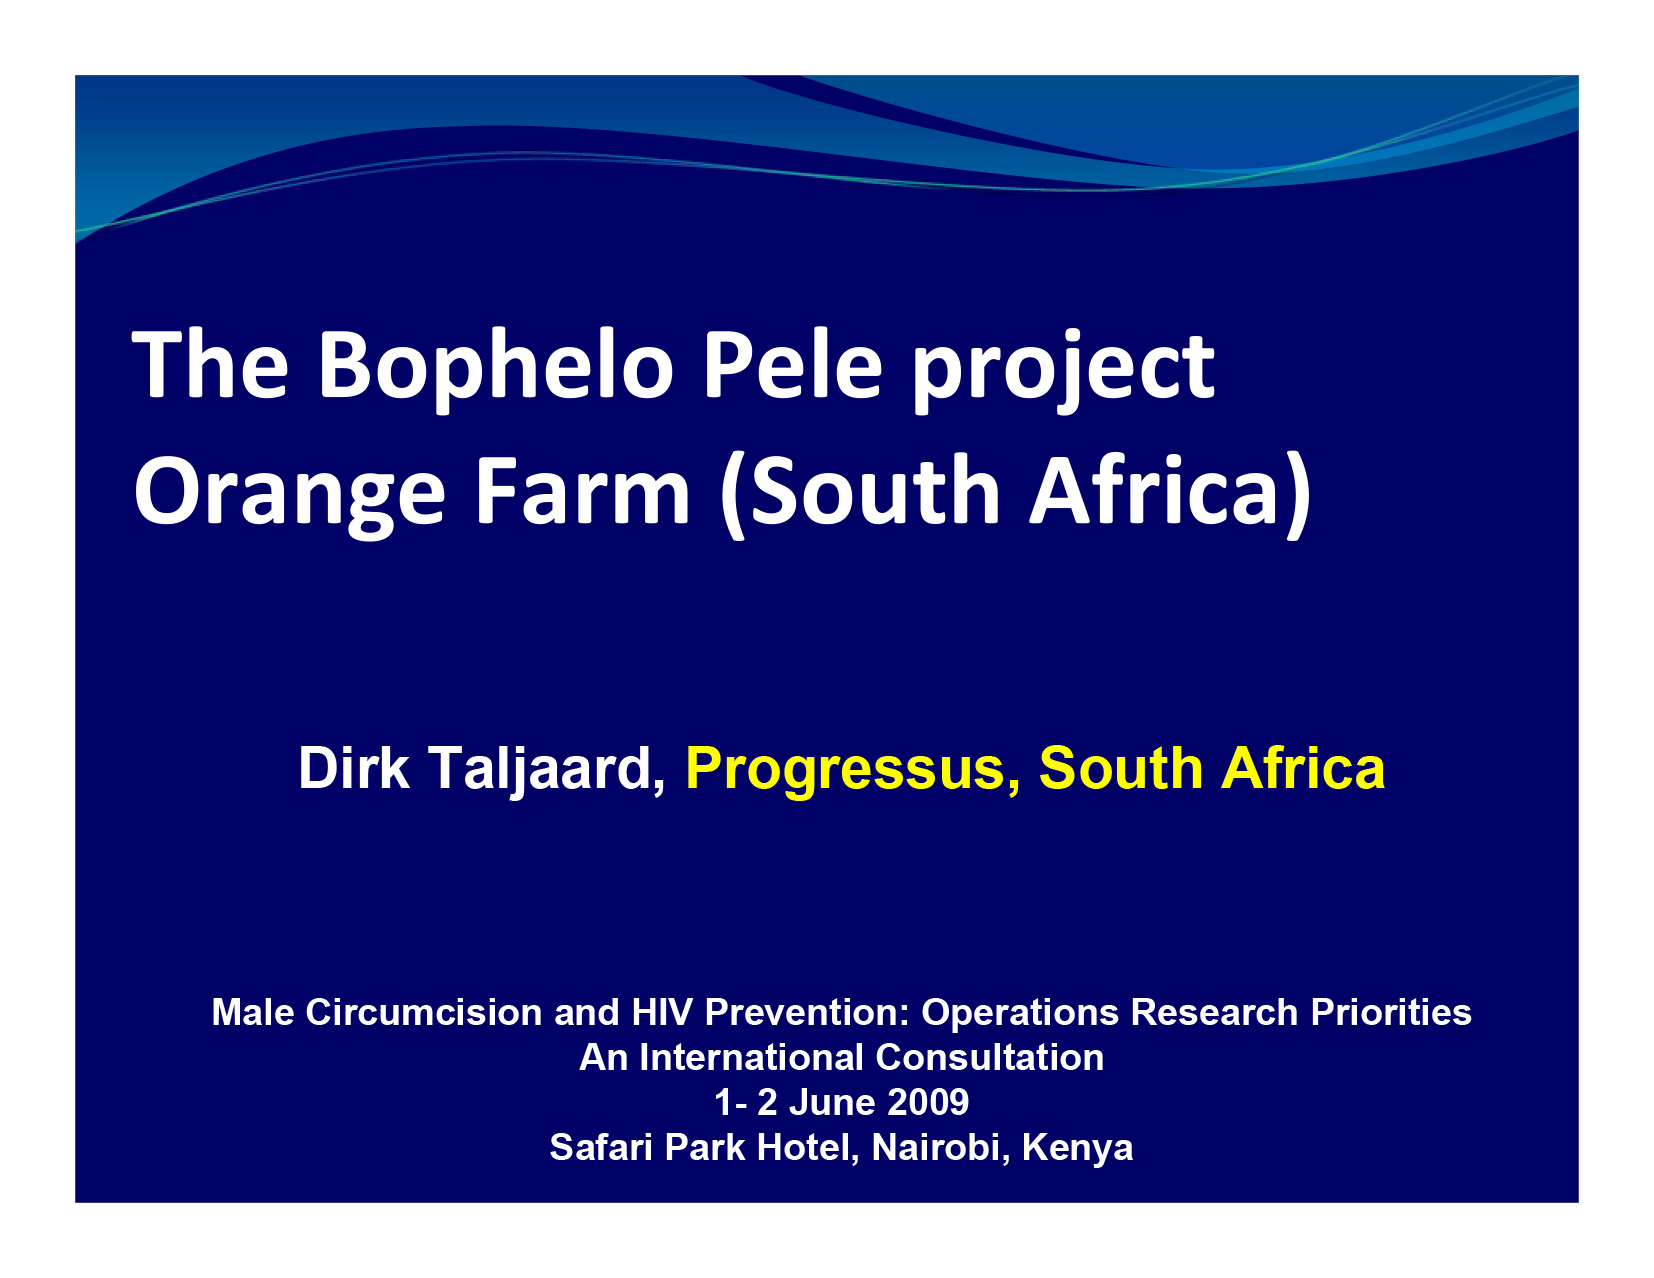 El proyecto Bophelo Pele Granja de naranjas - portada